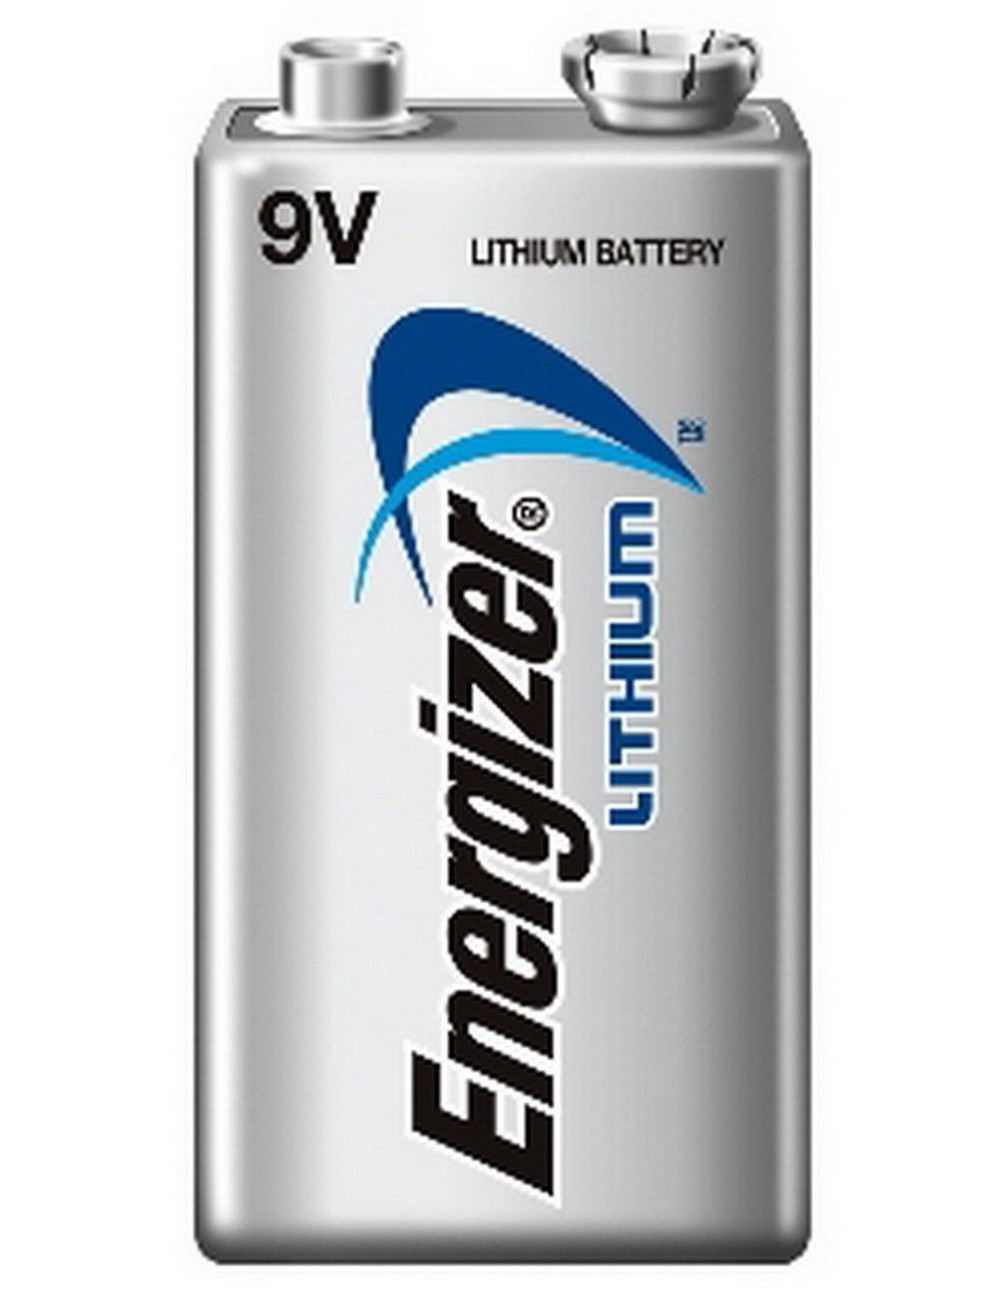 vertrekken fluctueren worst S9V L522 ENG (1/L522) Batterijen Lithium 1,5V Energizer (9V - 1000mAh) |  Mister Battery